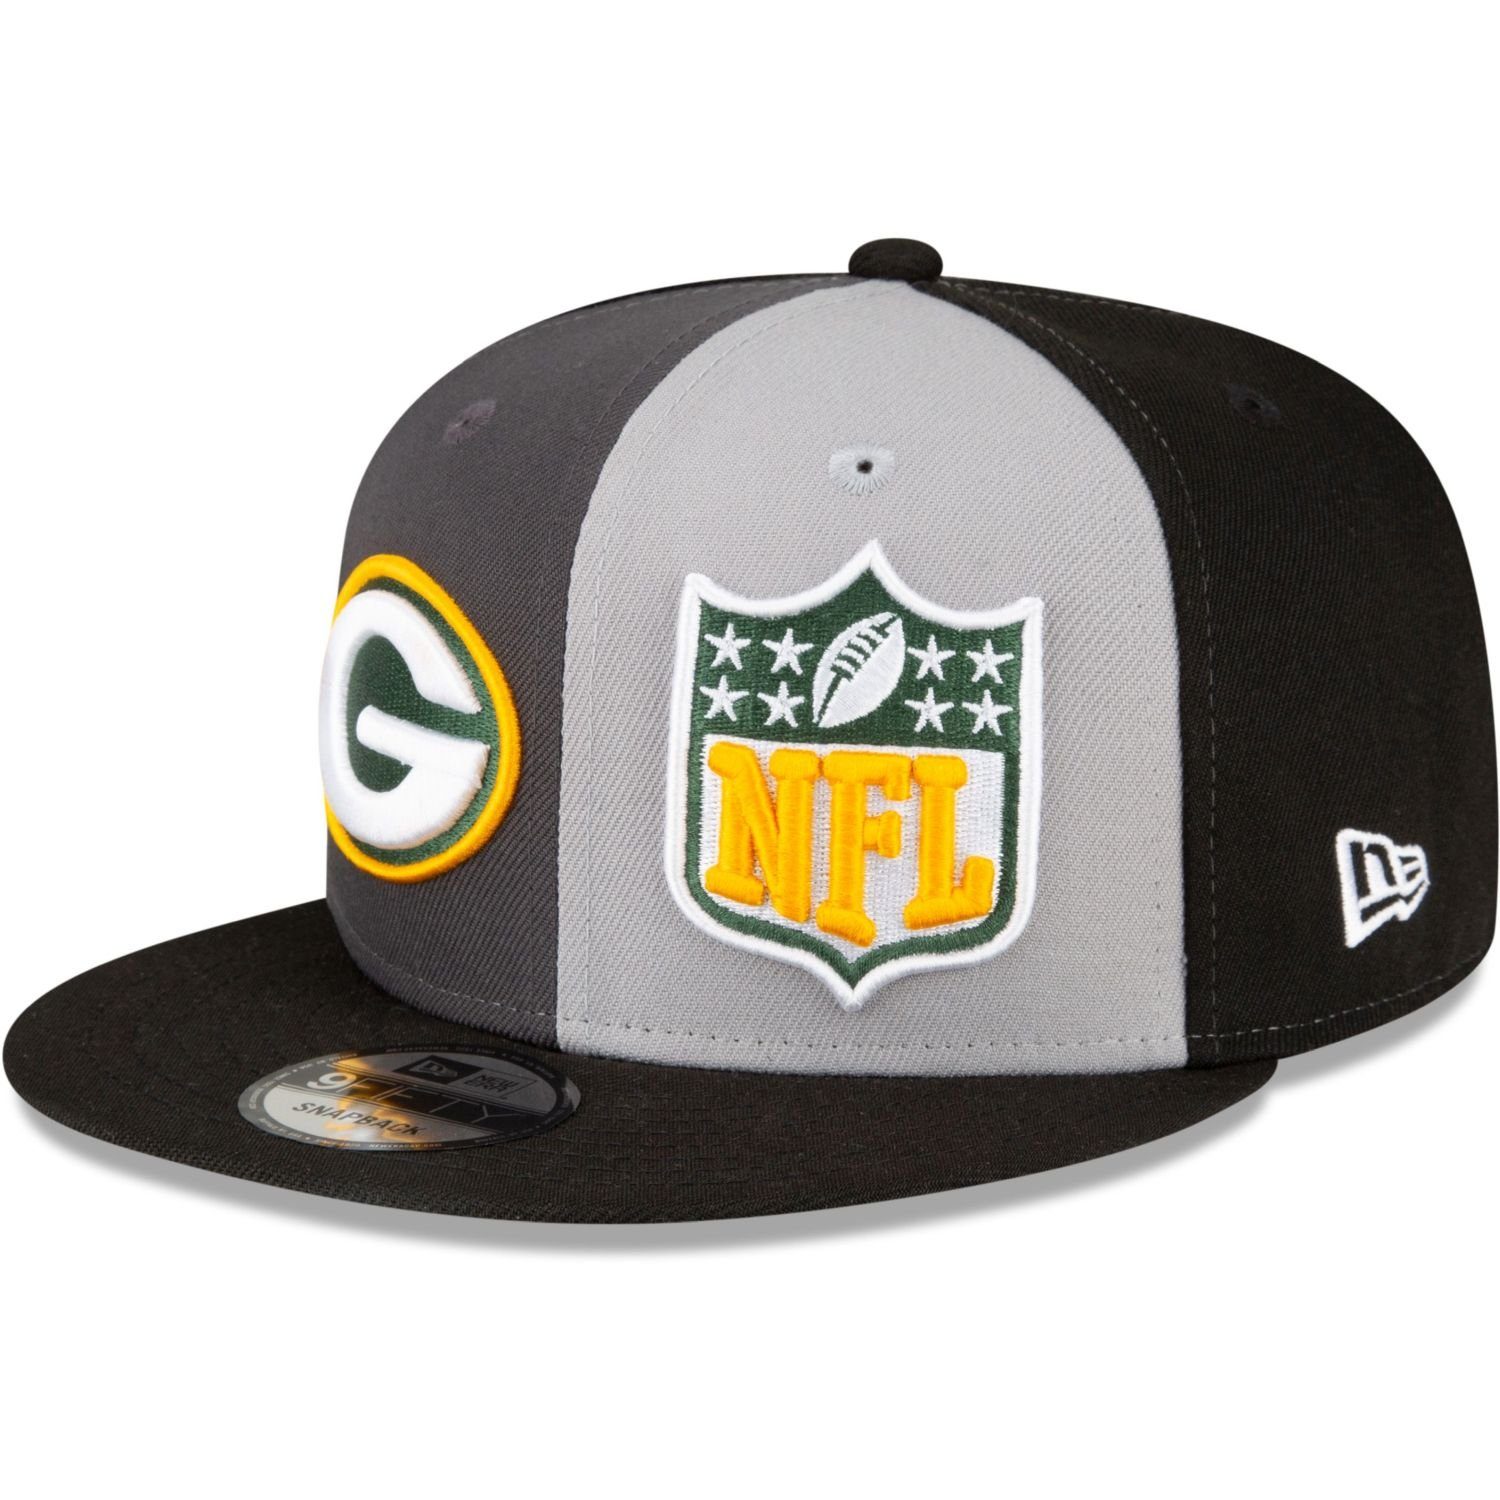 New Era Snapback Cap 9Fifty Sideline Green Bay Packers